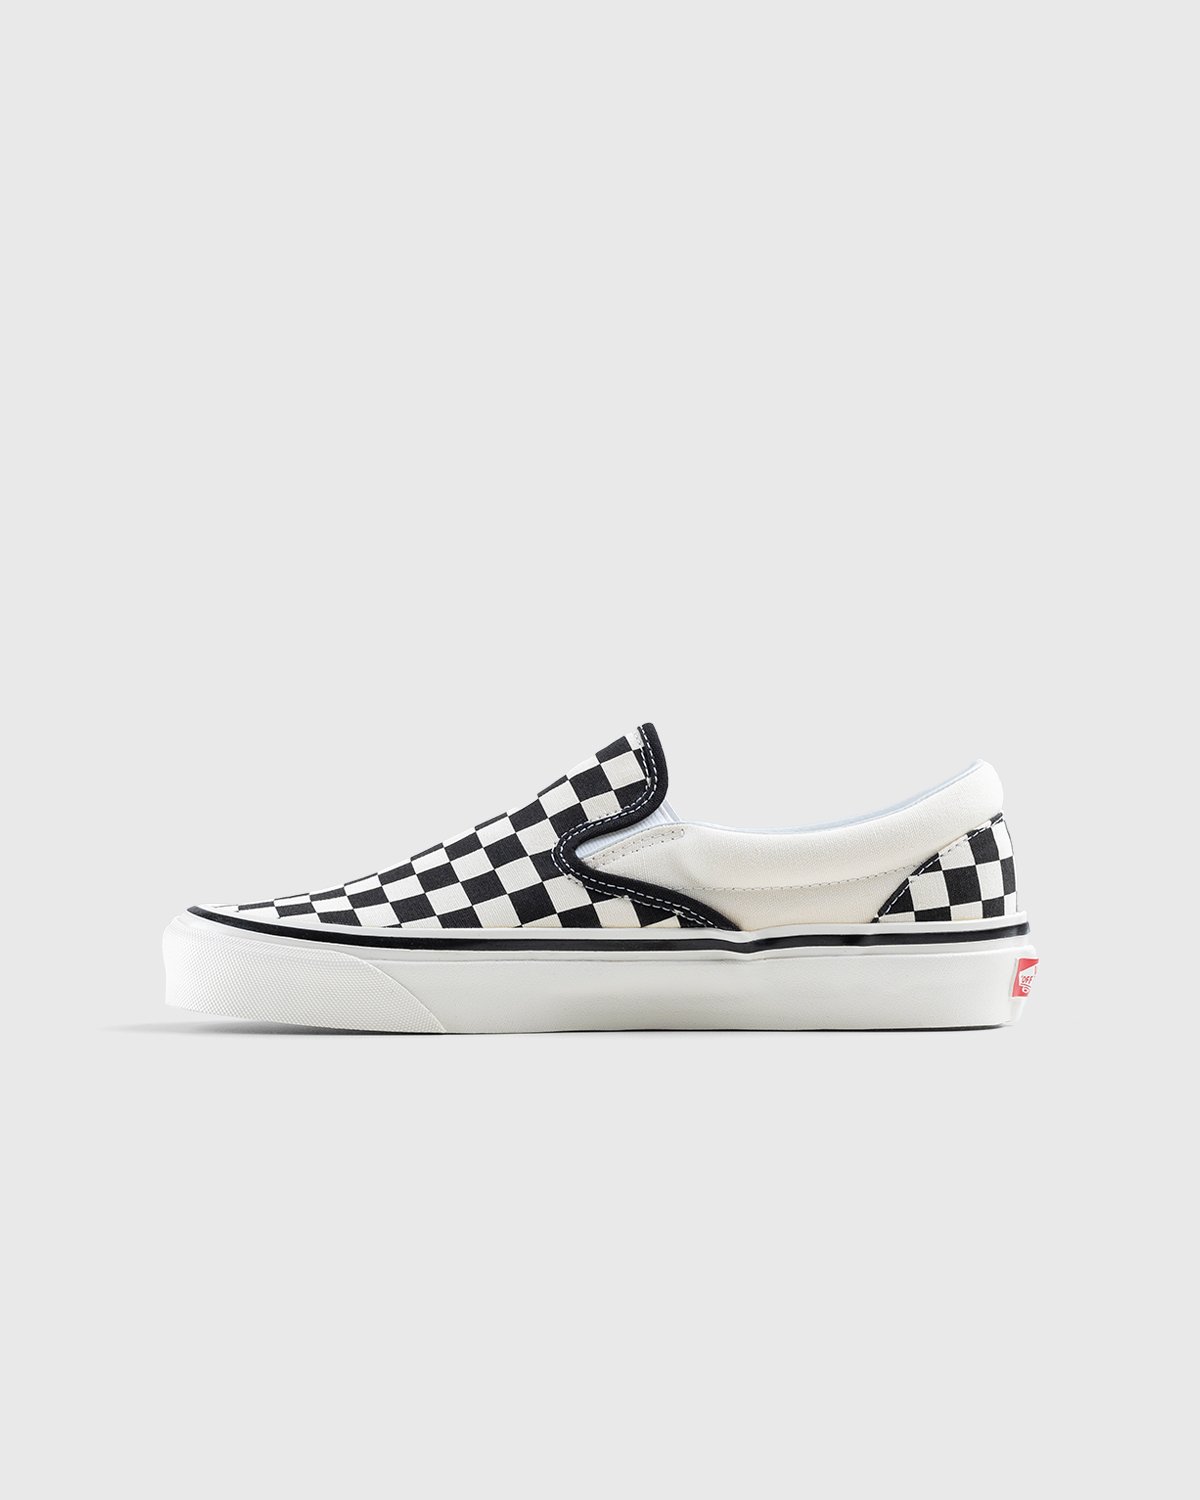 Vans - Anaheim Factory Classic Slip-On 98 DX Checkerboard - Footwear - White - Image 2